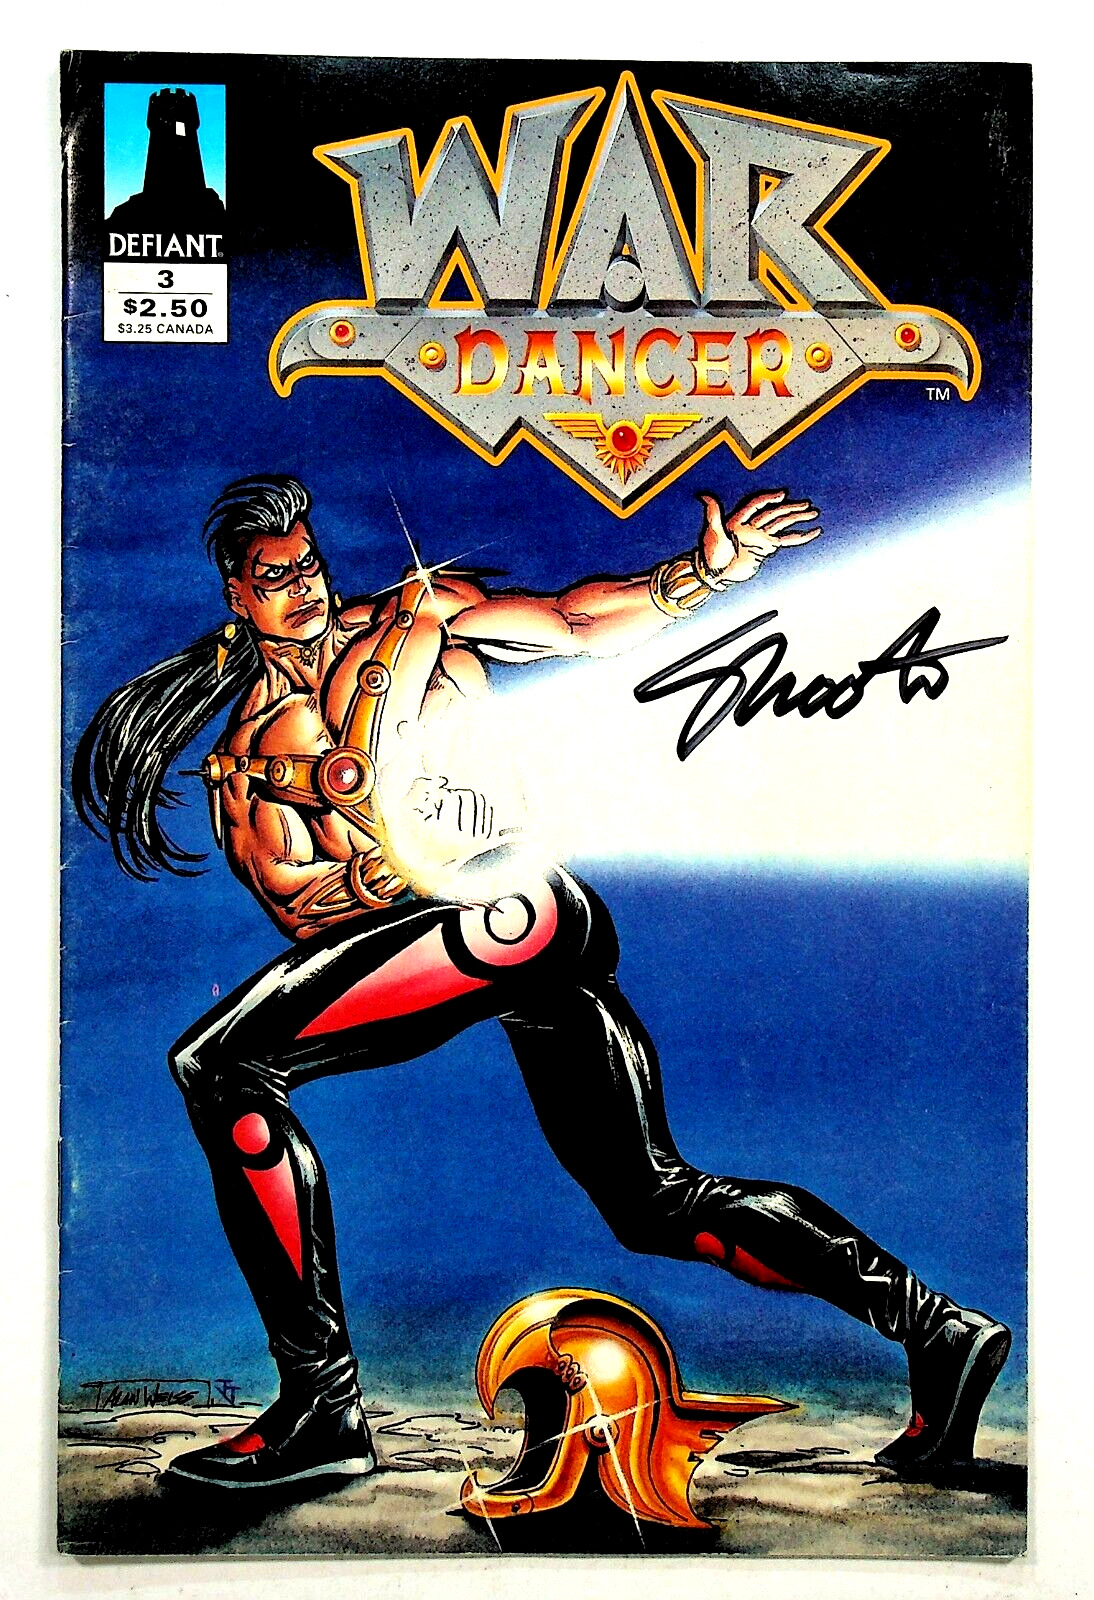 War Dancer #3 Signed by Jim Shooter Defiant Comics